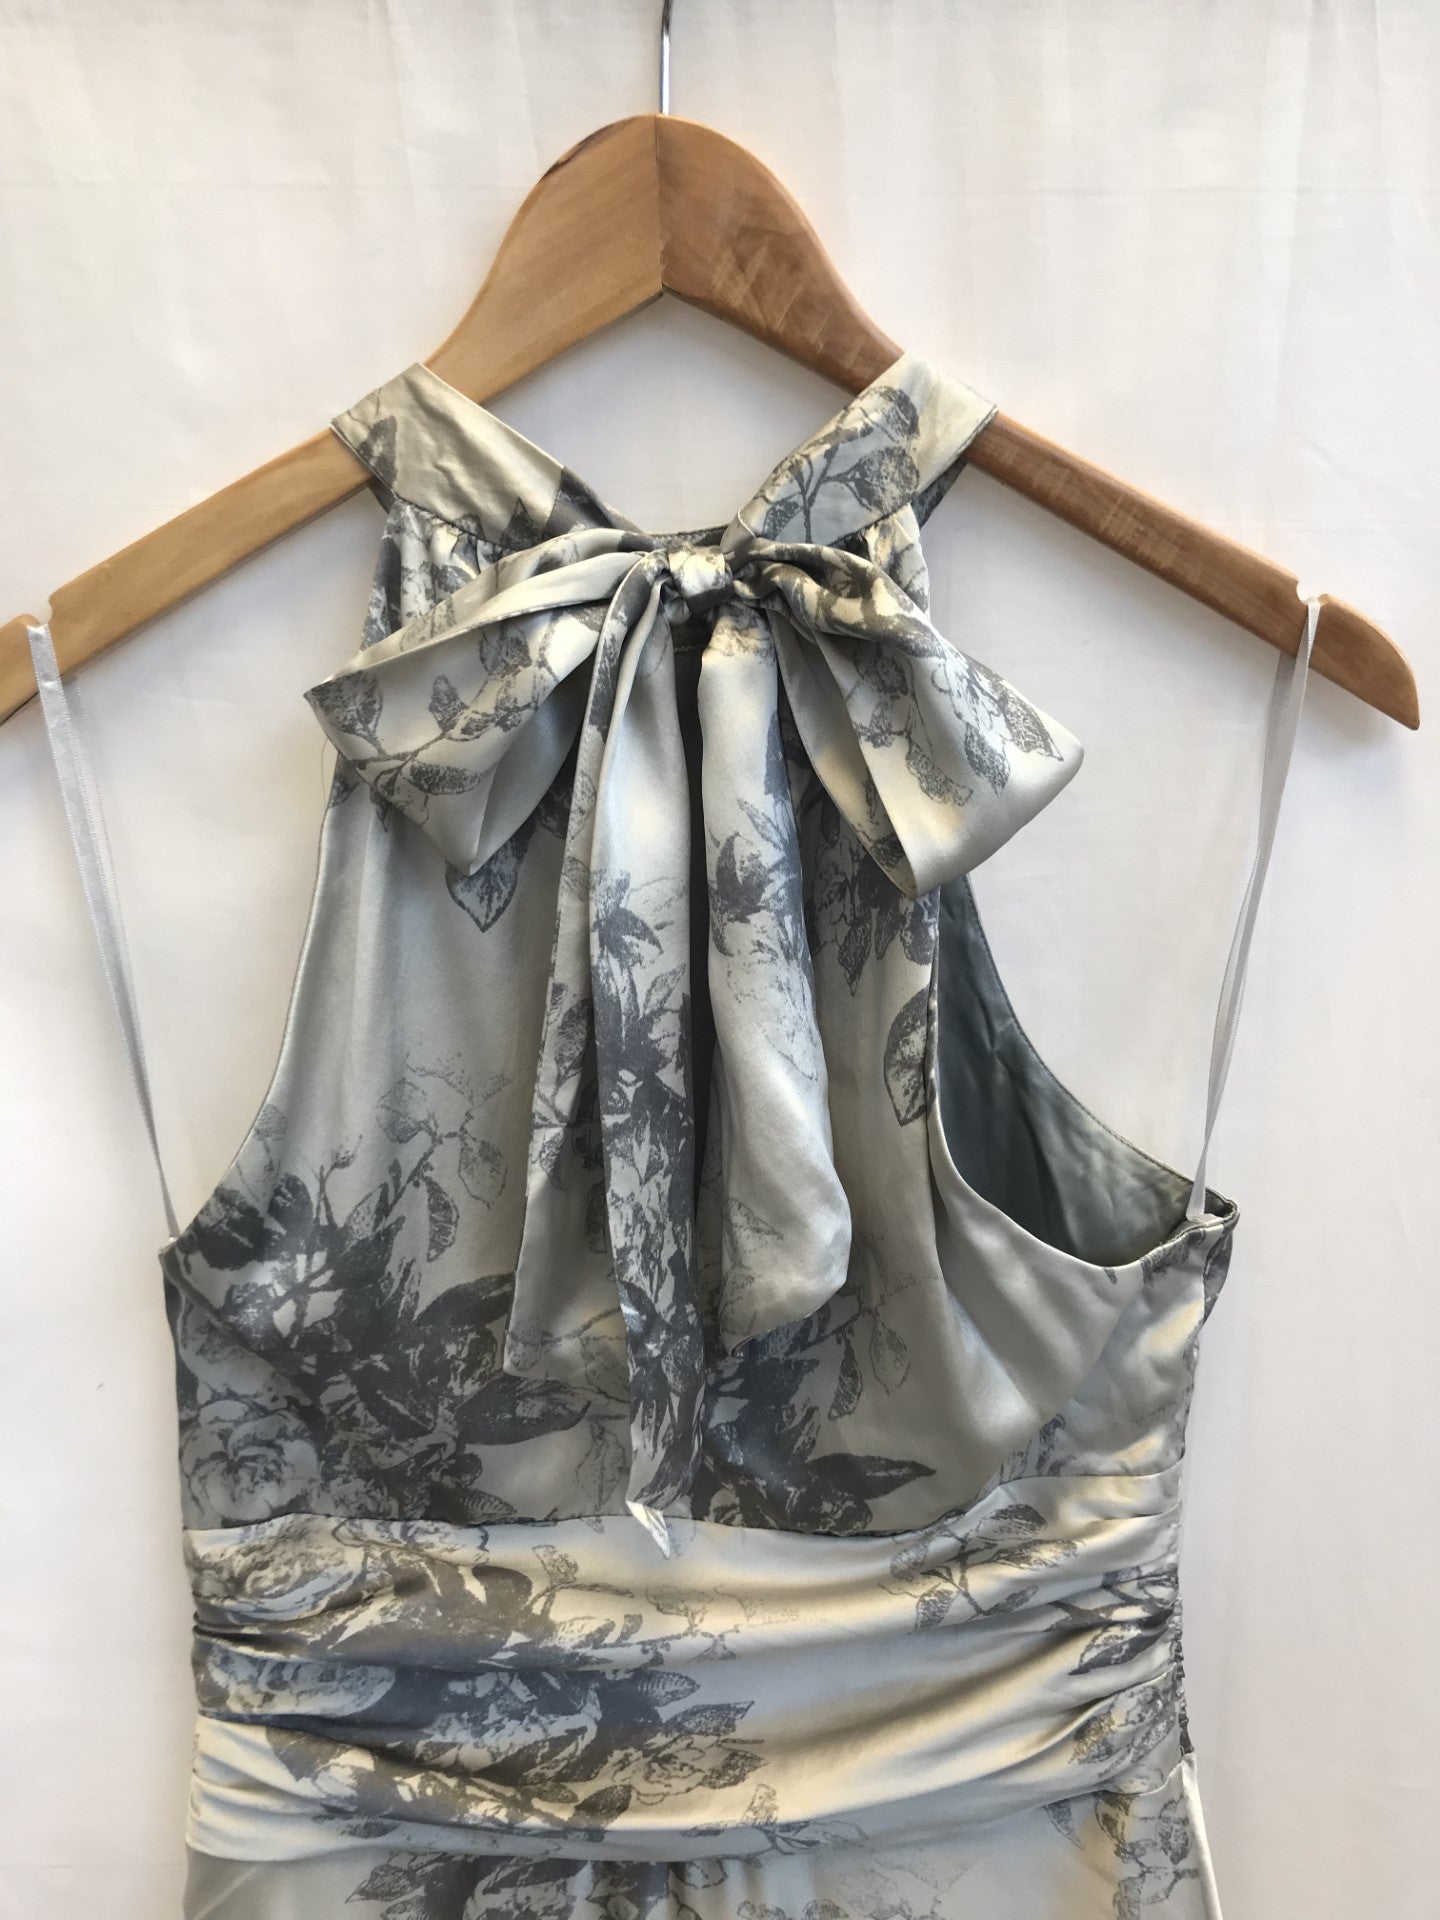 Coast Grey Floral 100% Silk Dress, Size UK 10